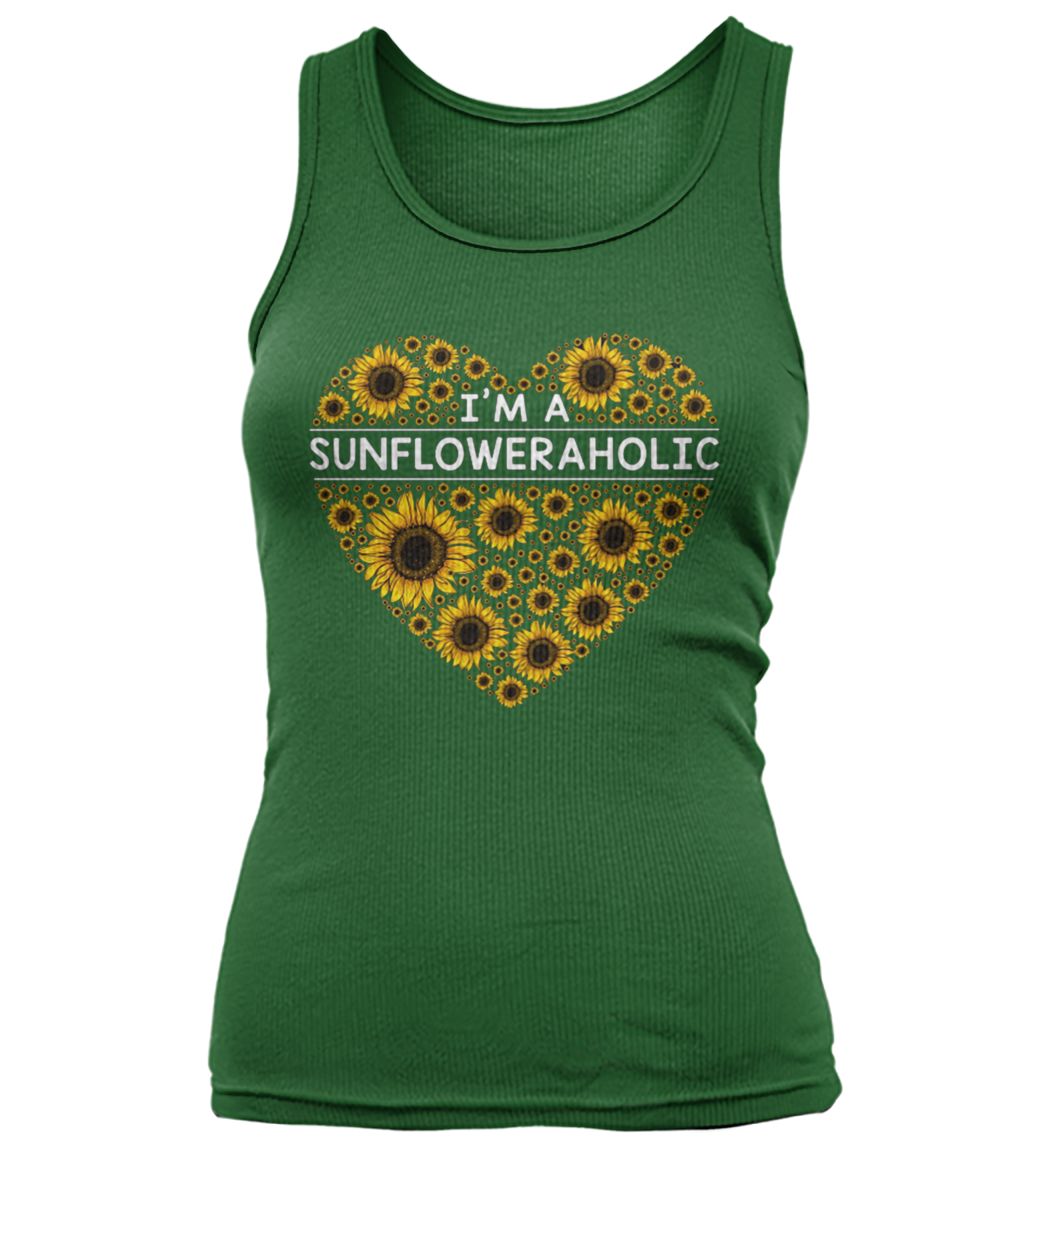 I'm a sunflower aholic women's tank top